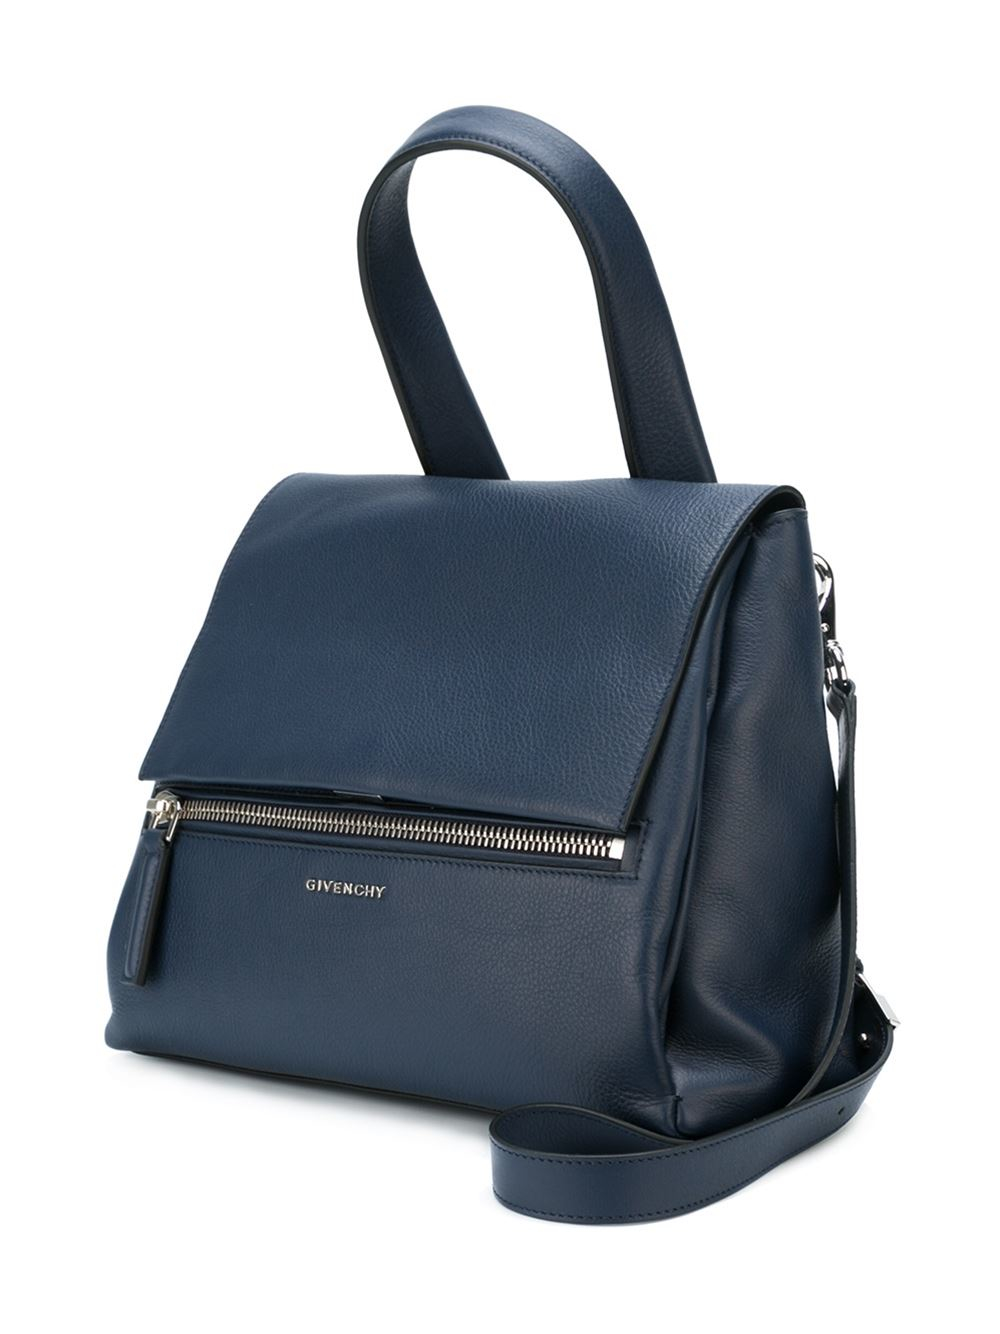 Givenchy Medium 'pandora Pure' Shoulder Bag in Blue | Lyst